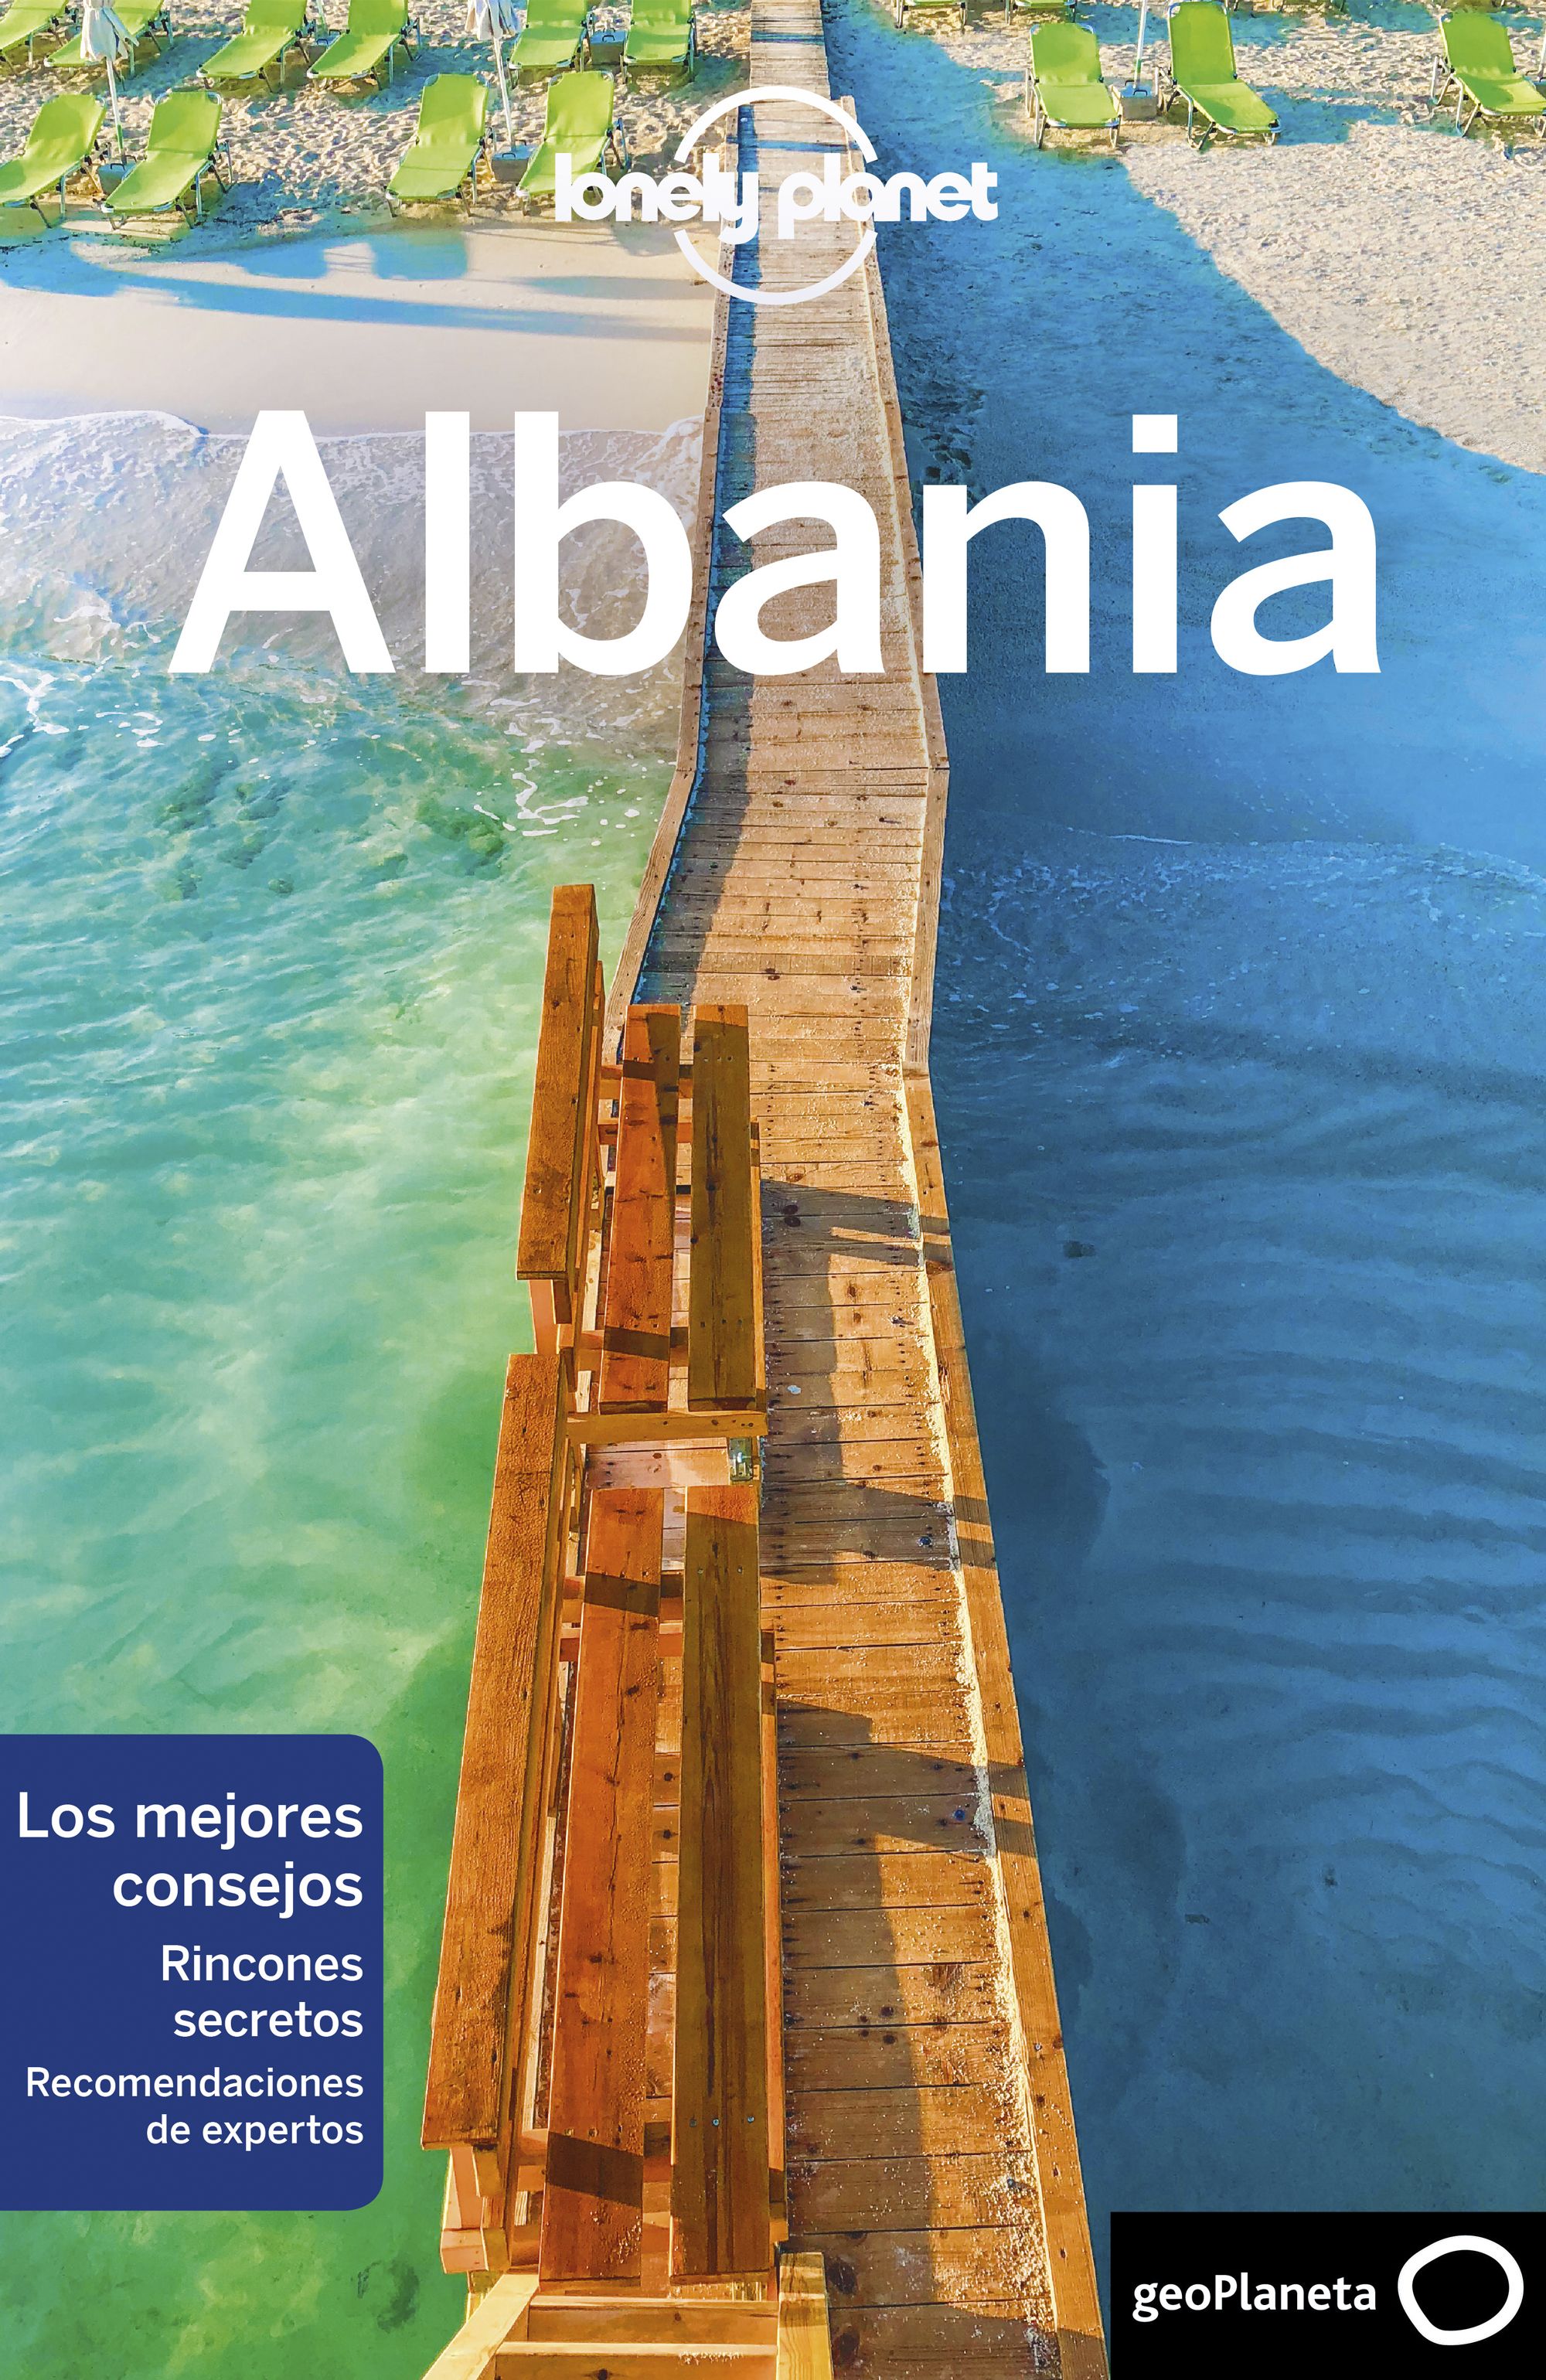 Albania (Lonely Planet)